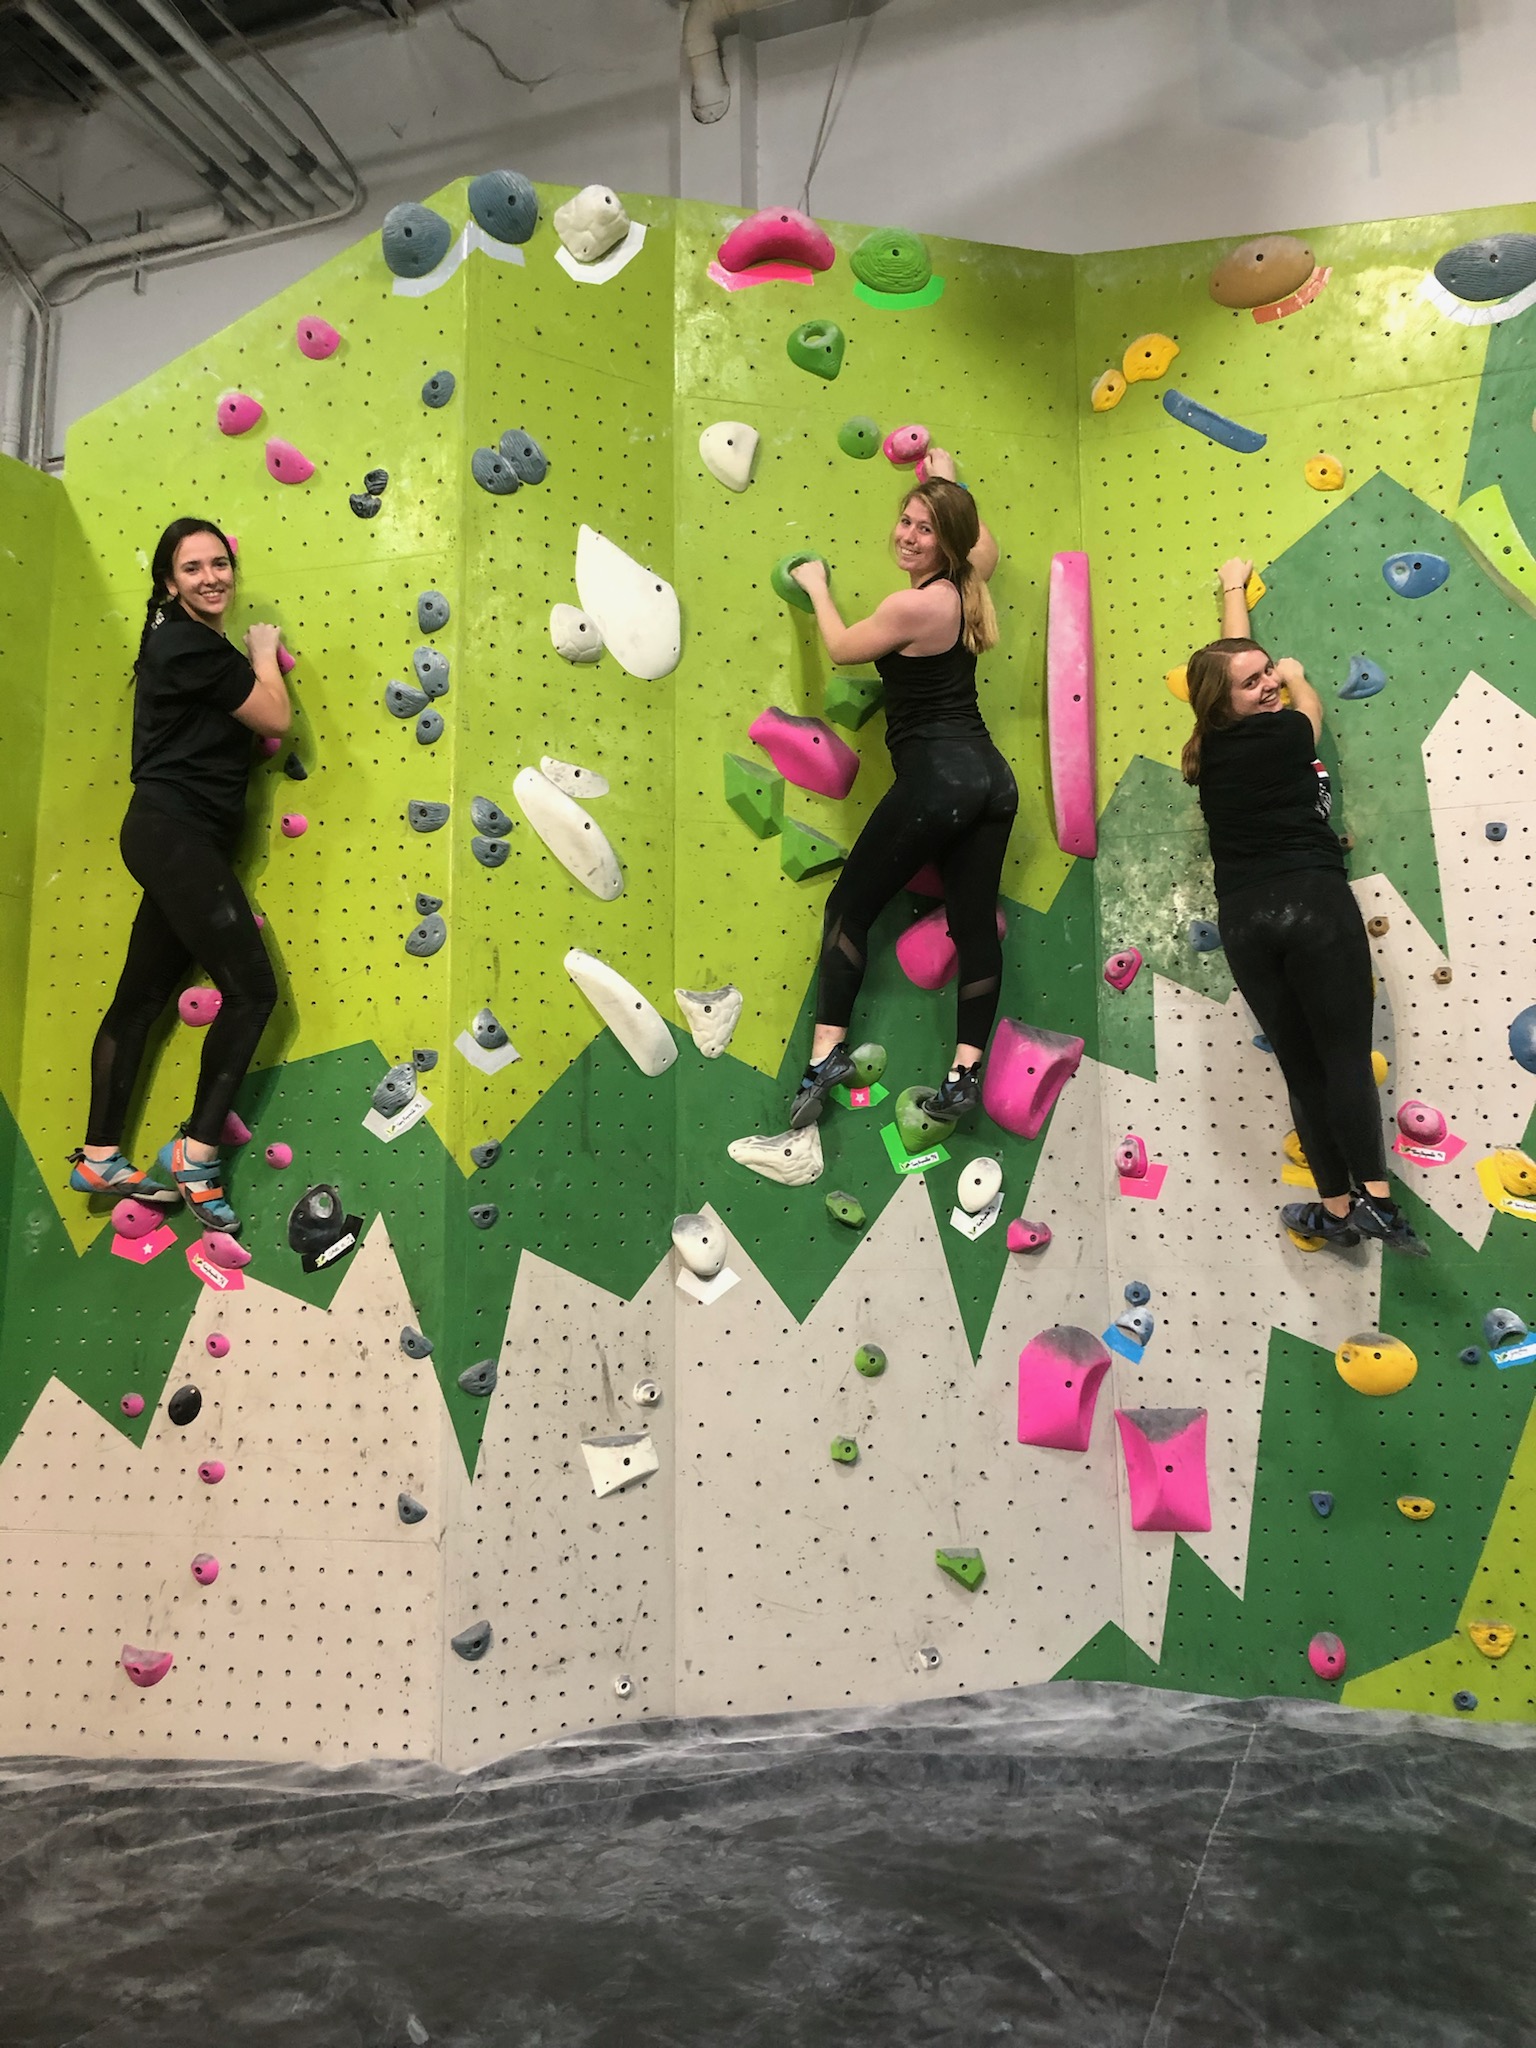 Christina Himes with fellow club members rock climbing